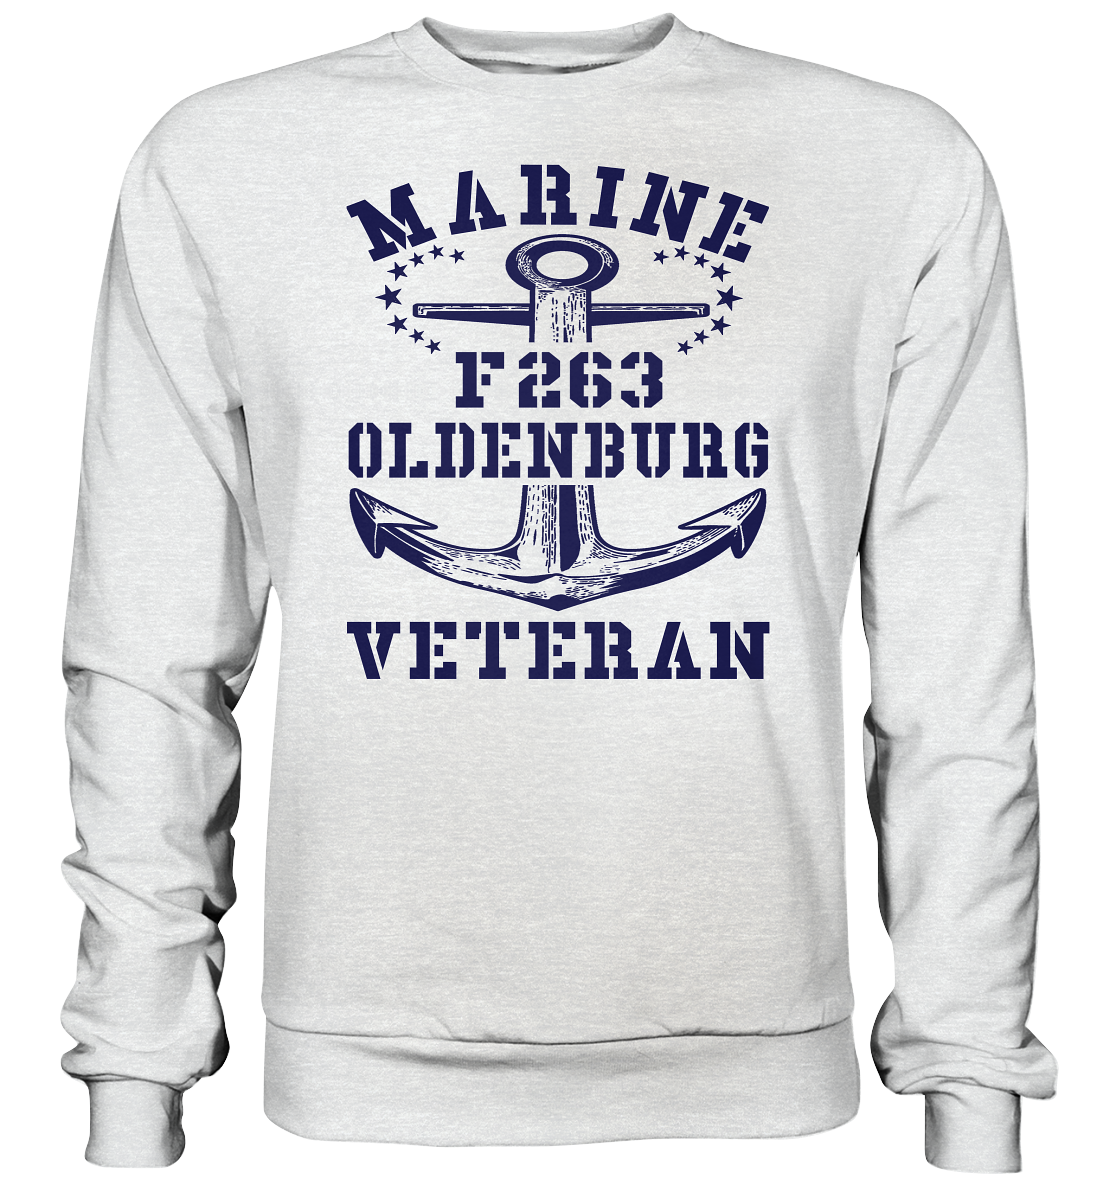 Korvette F263 OLDENBURG Marine Veteran  - Premium Sweatshirt